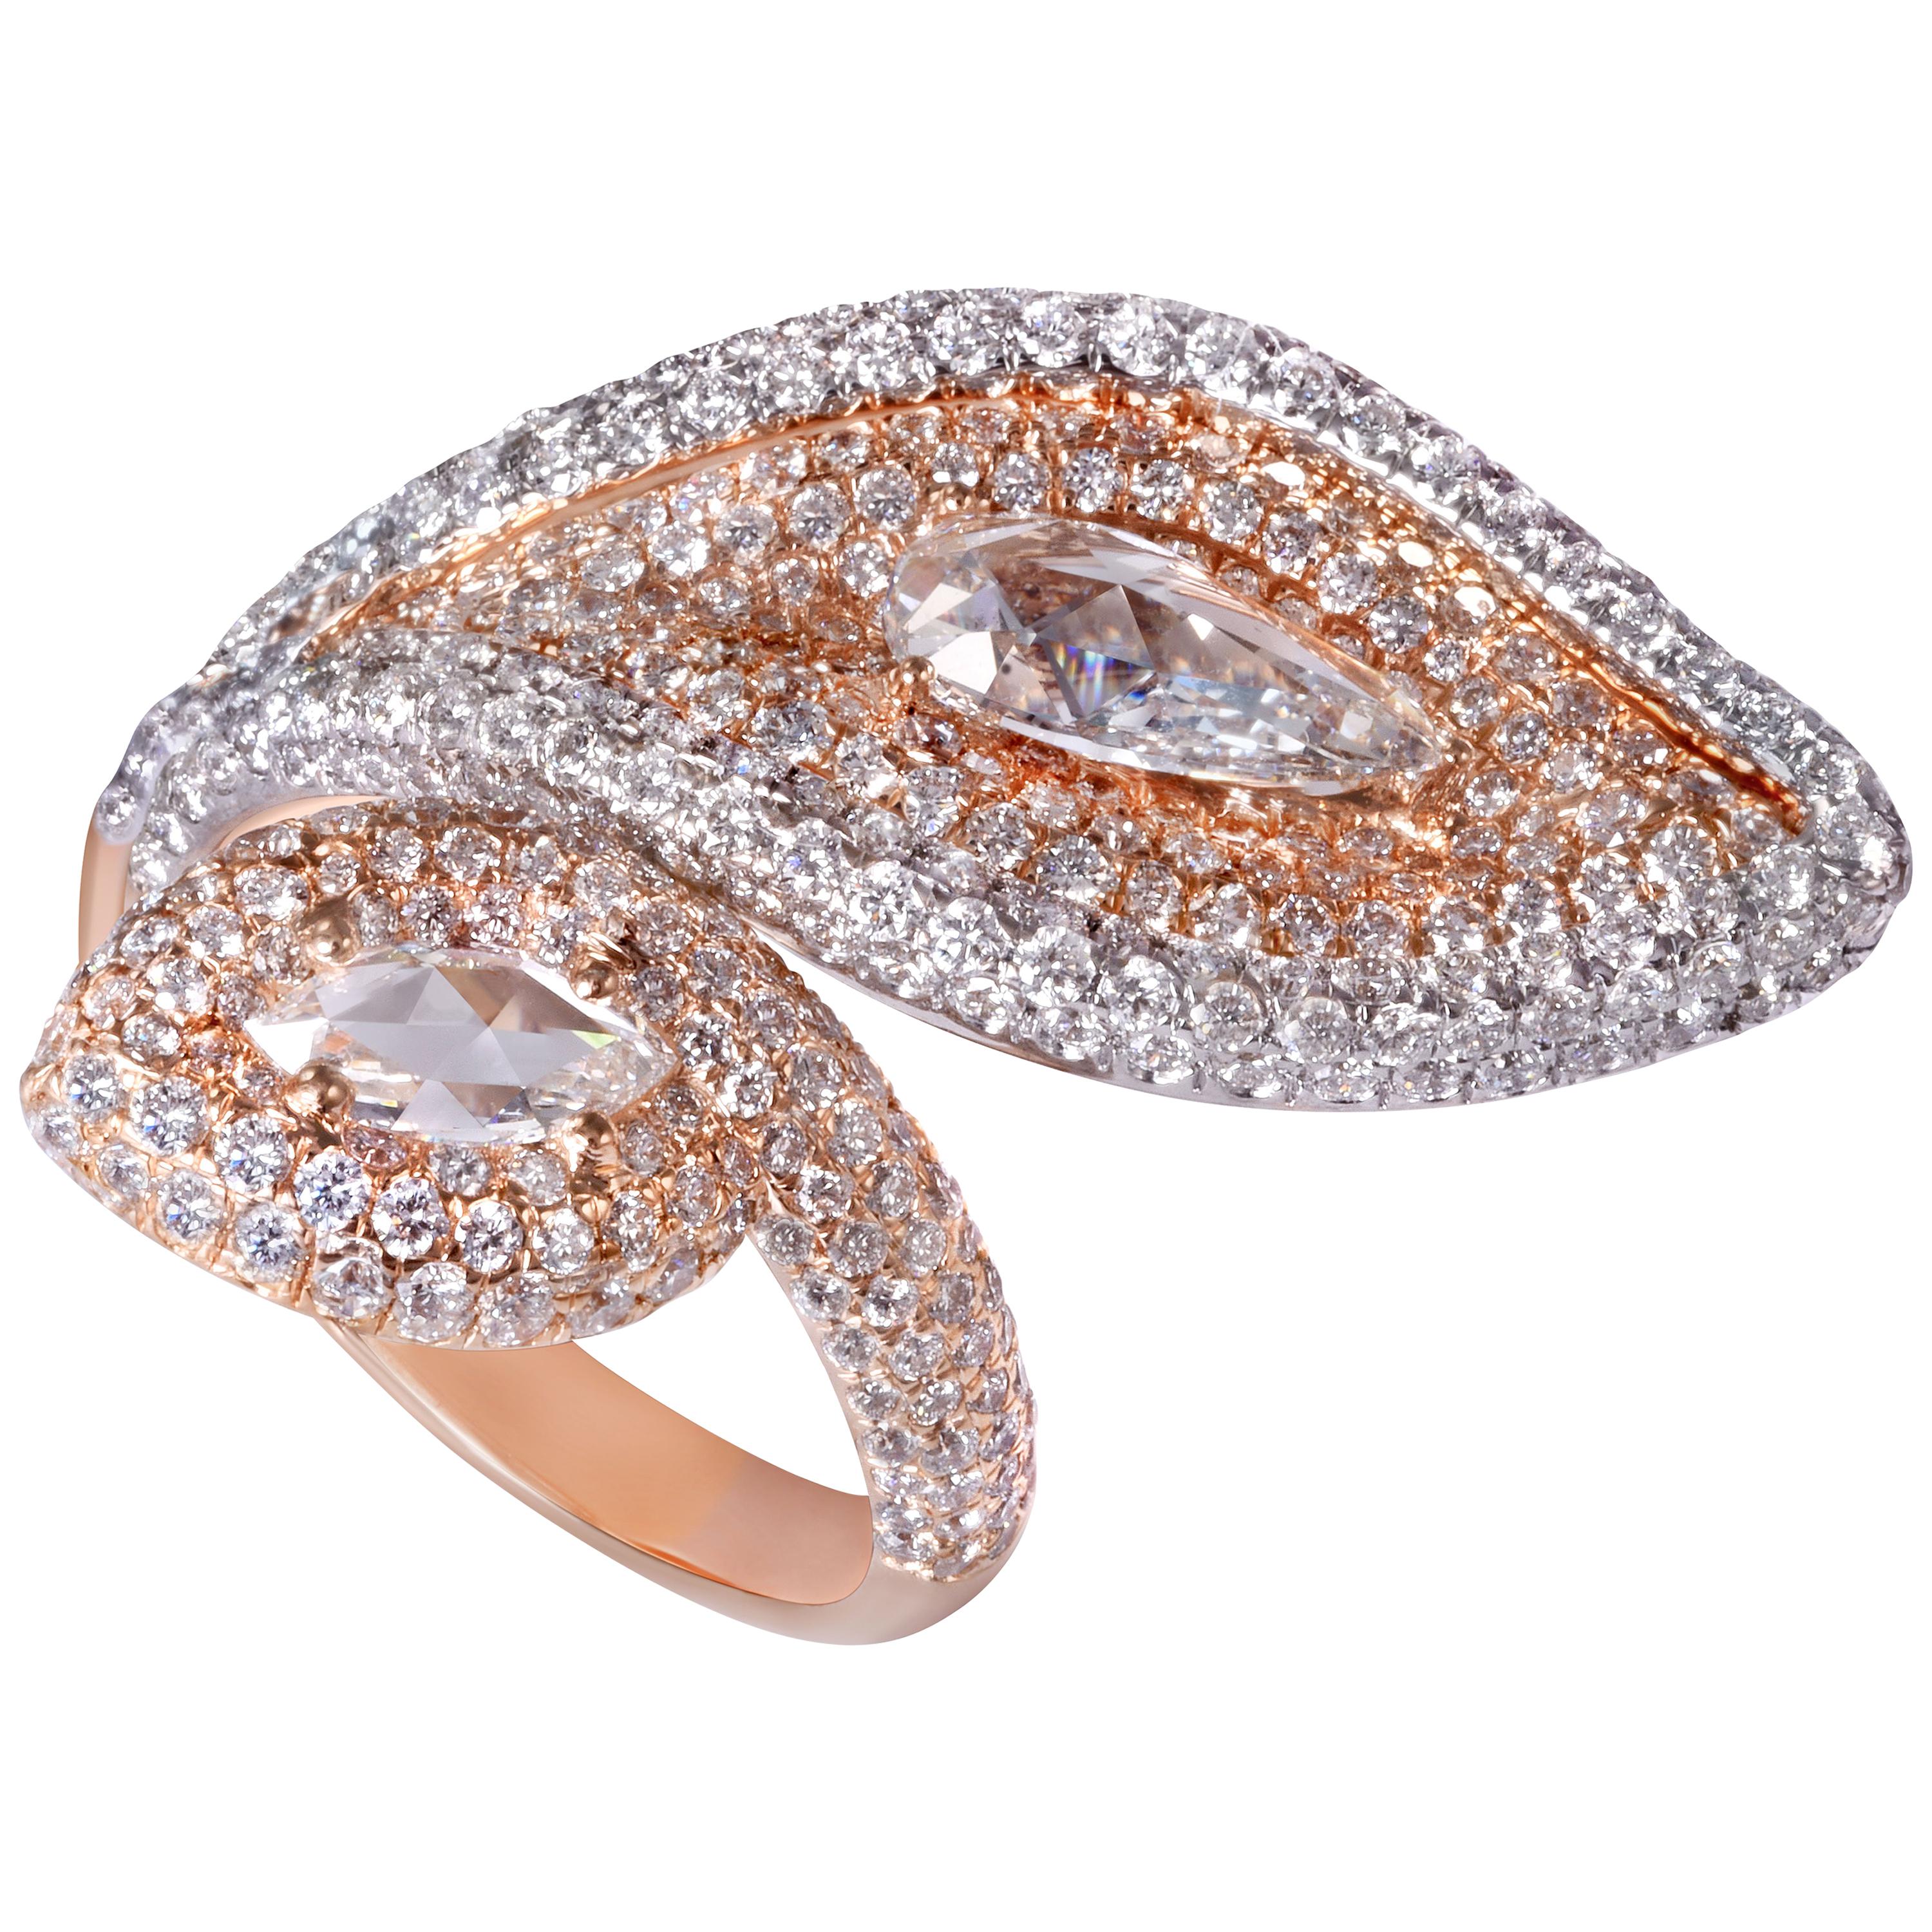 Rarever 18K Rose Gold 3.66cts Pave Set Pear Shape Diamond Cocktail Ring  For Sale